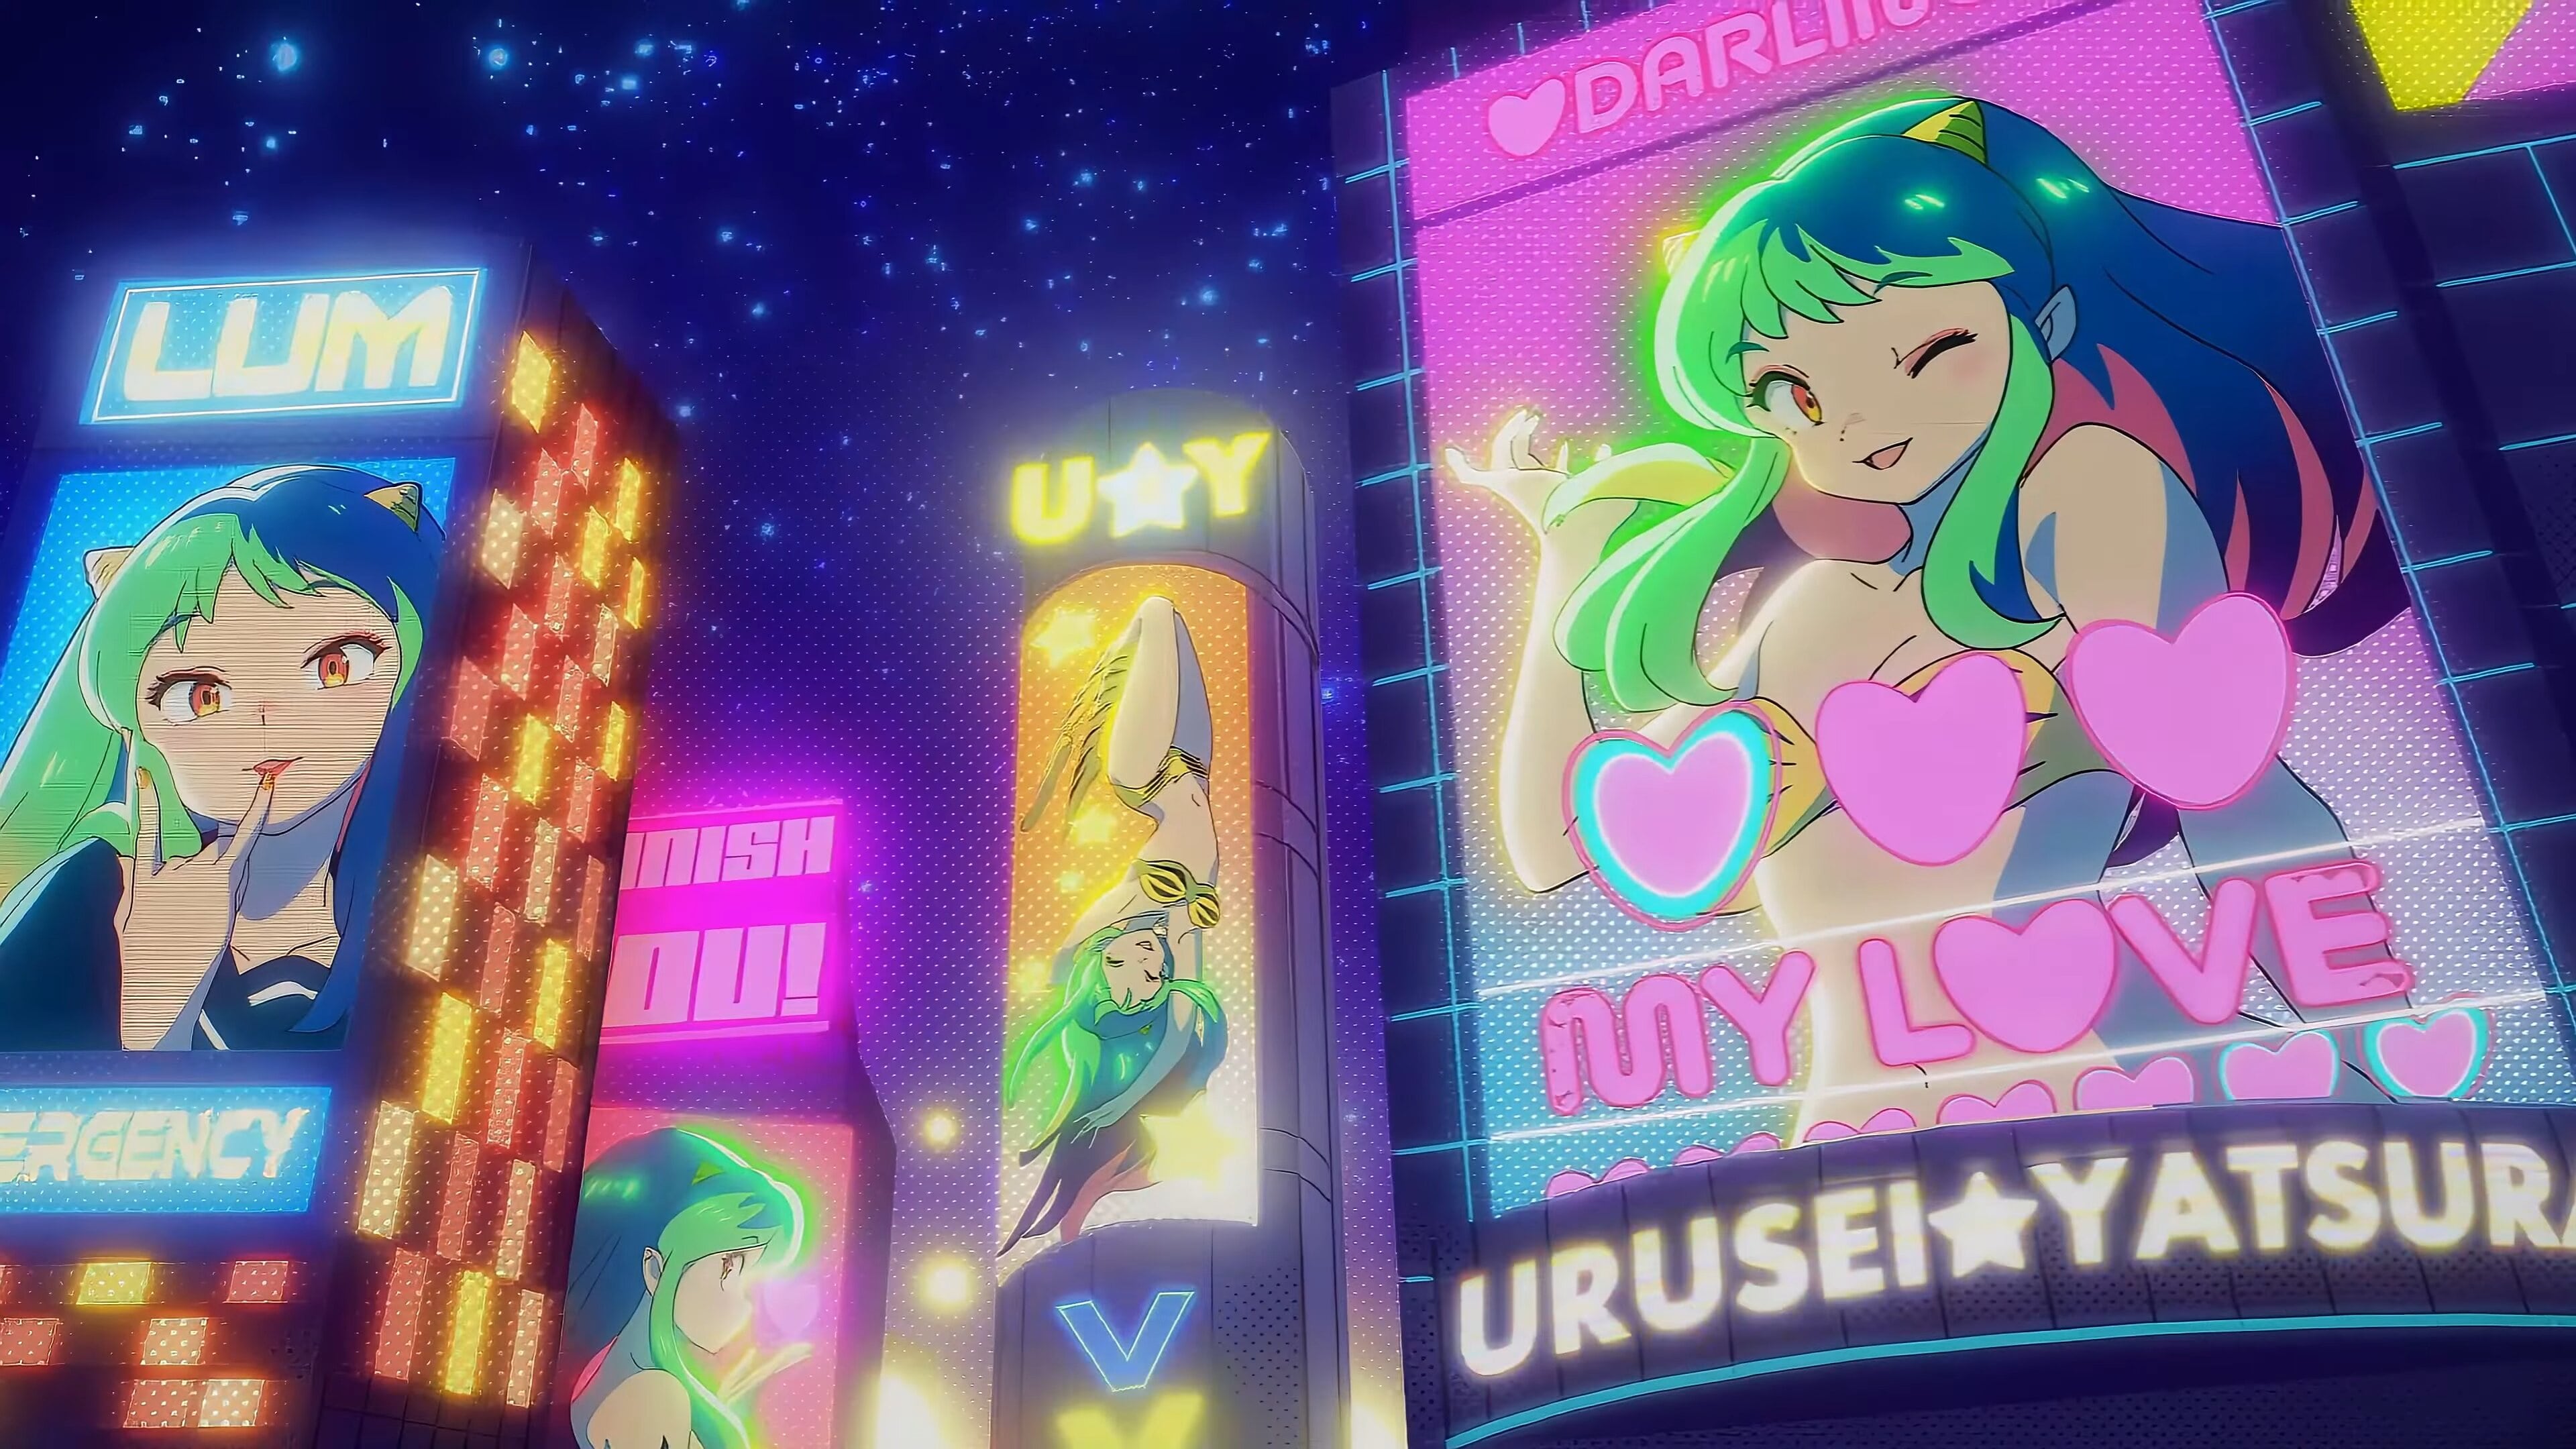 Urusei Yatsura Lum Invader Anime Girls Signs Night Advertisements Oni Wink Text Lip Gloss Anime Scre 3840x2160